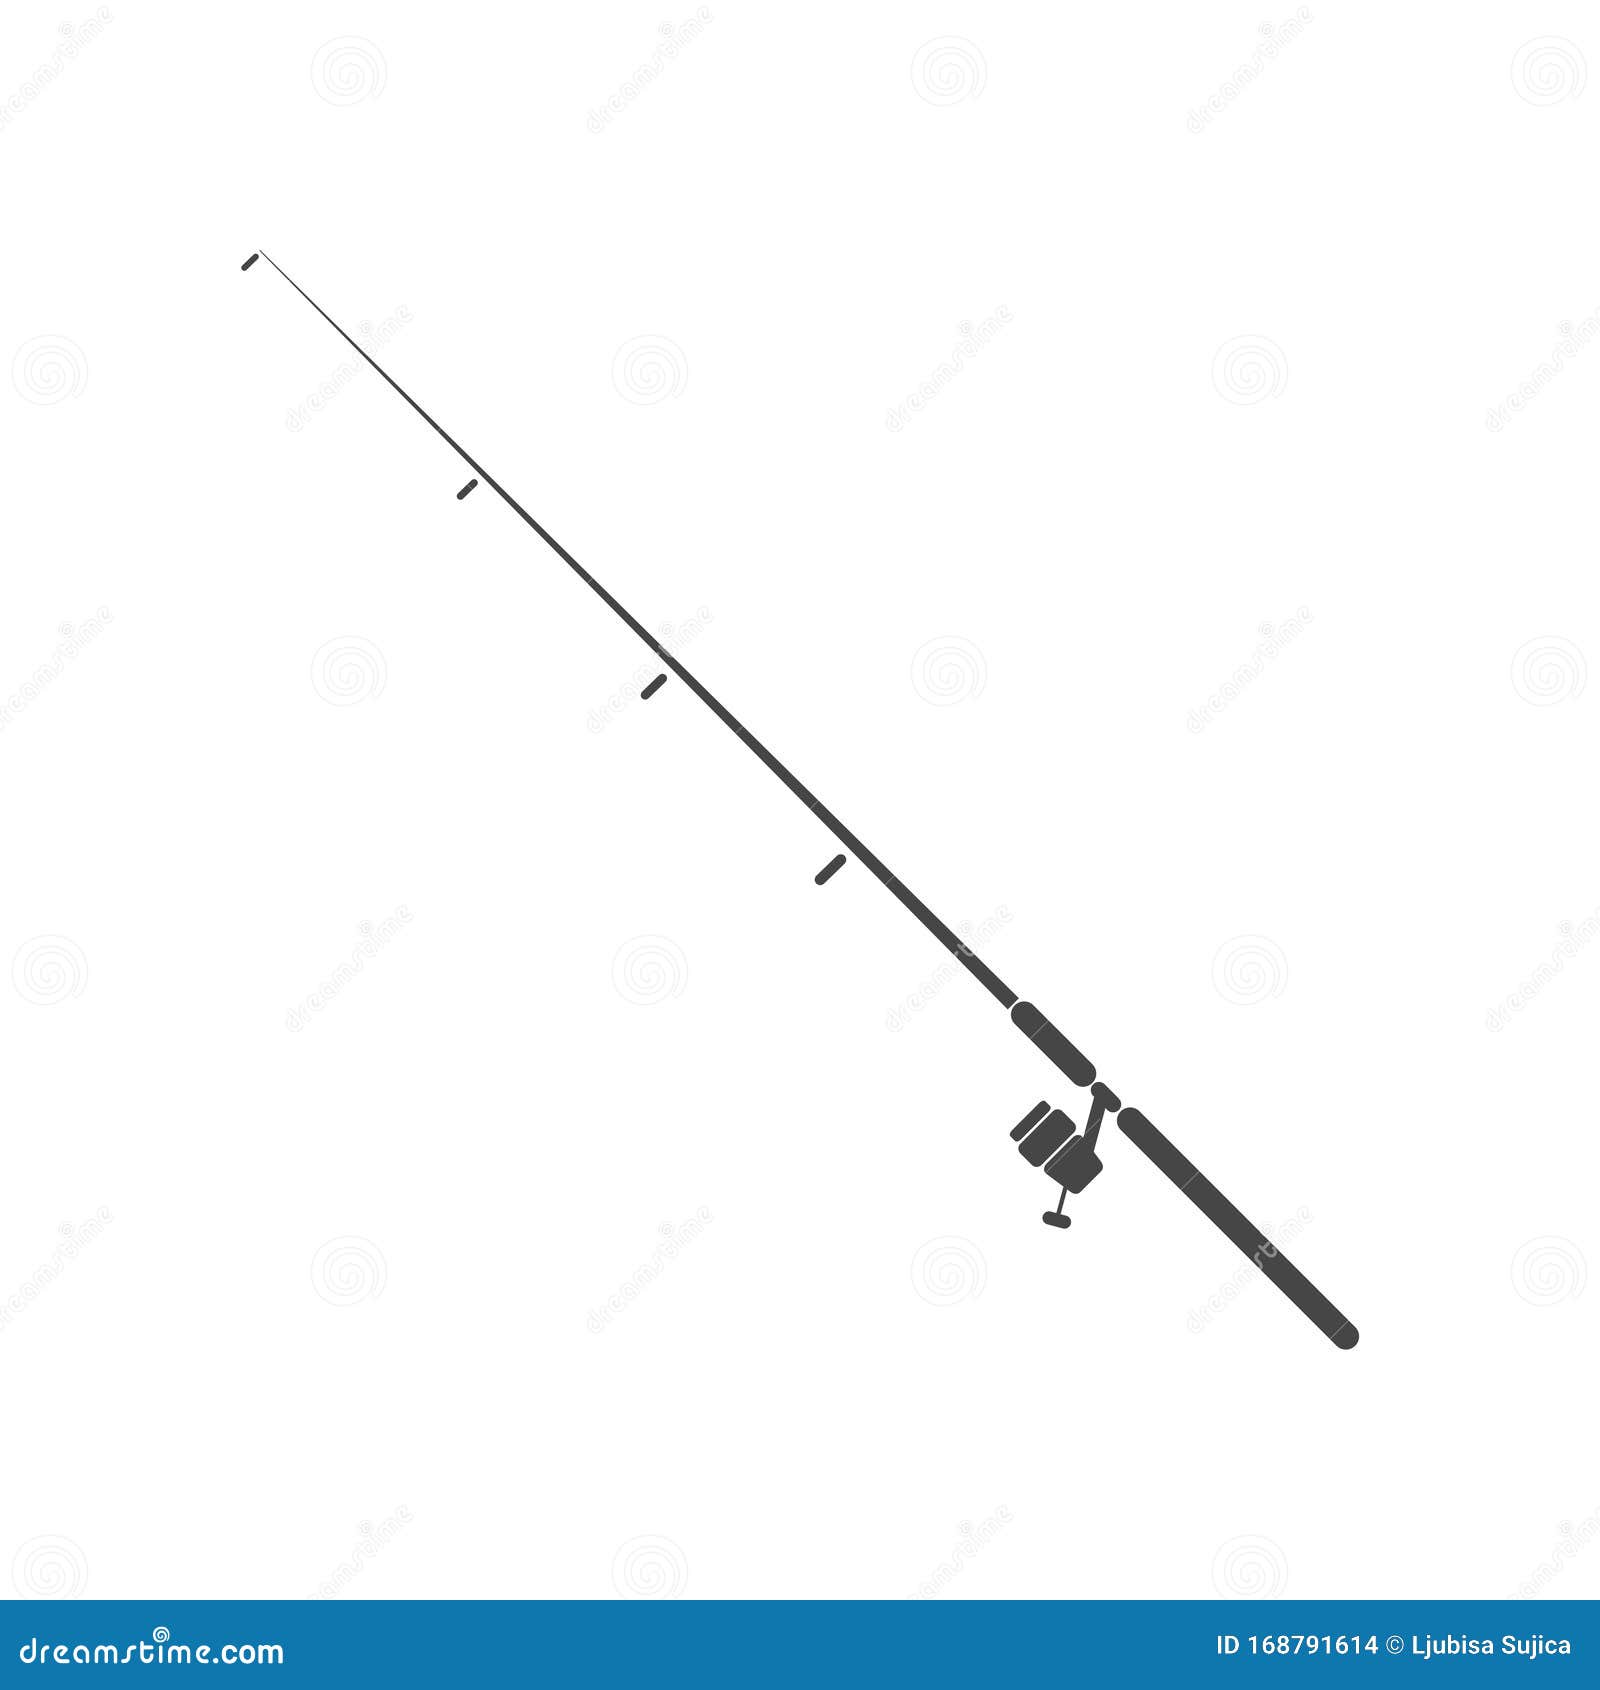 Fishing rod - Illustration stock vector. Illustration of pursuit - 168791614